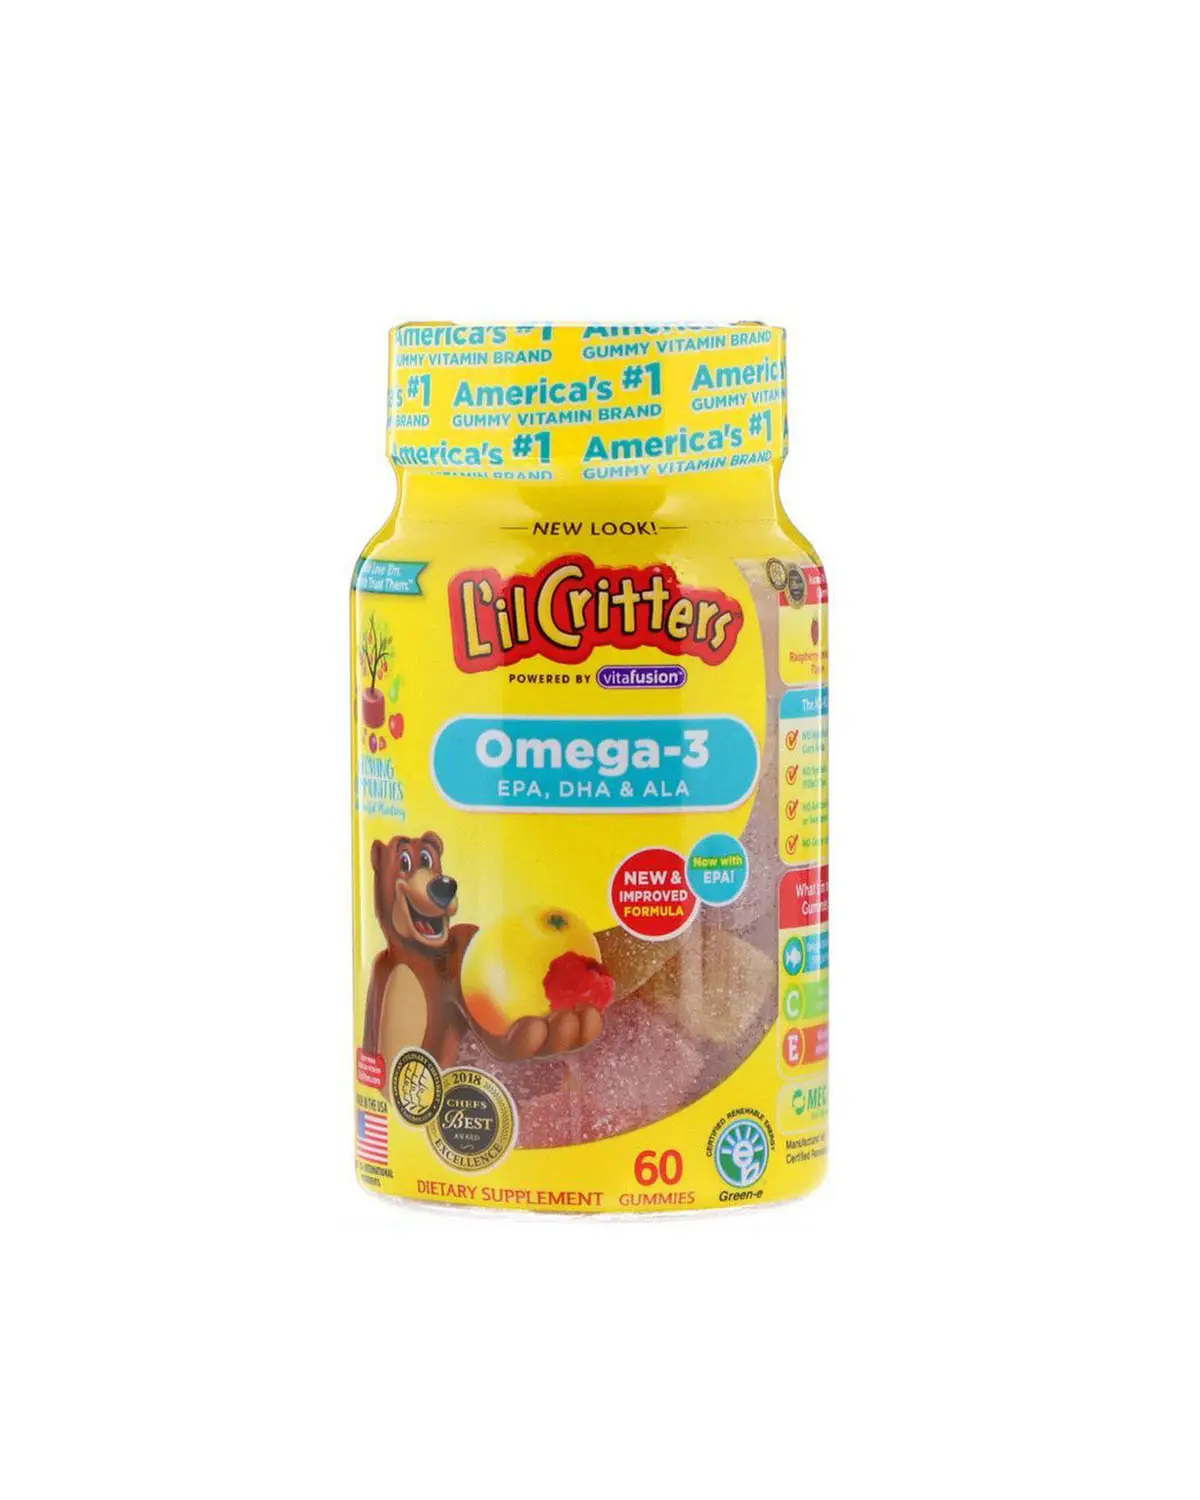 Омега-3 ДГК для детей вкус малины и лимонада | 60 жев таб L'il Critters 202040480